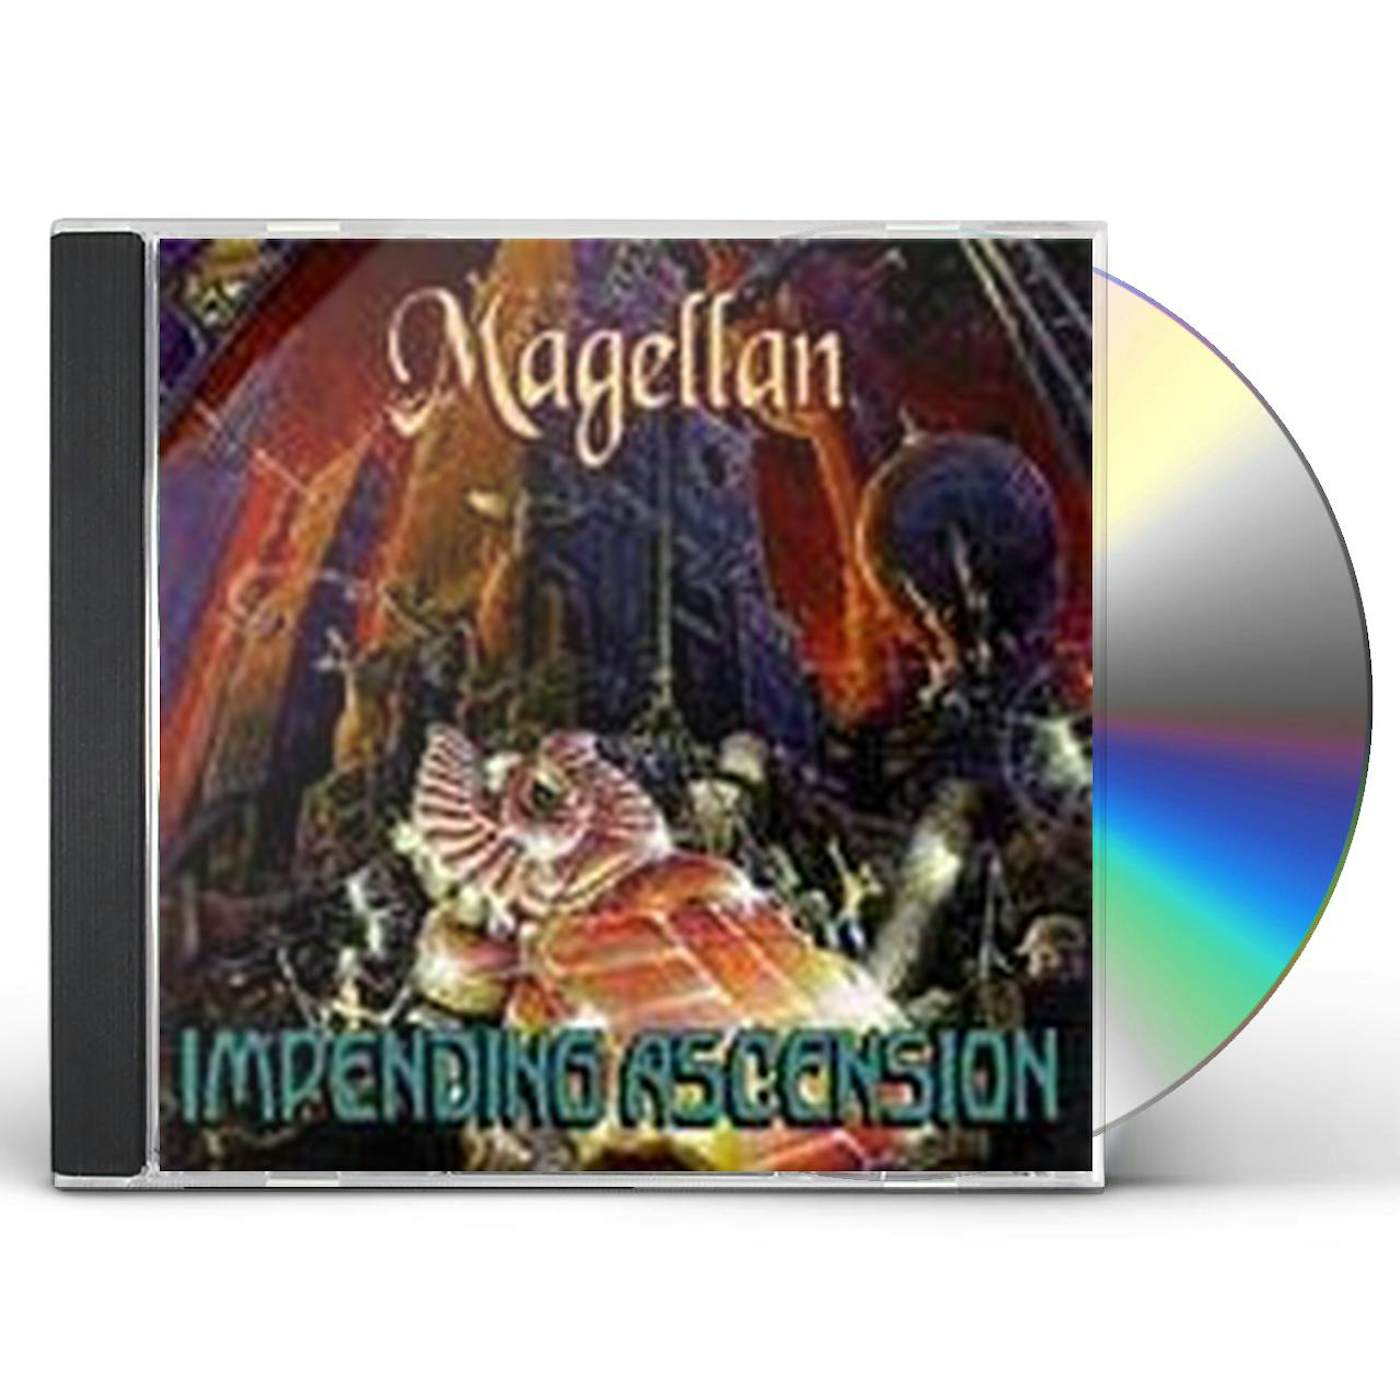 Magellan IMPENDING ASCENSION CD